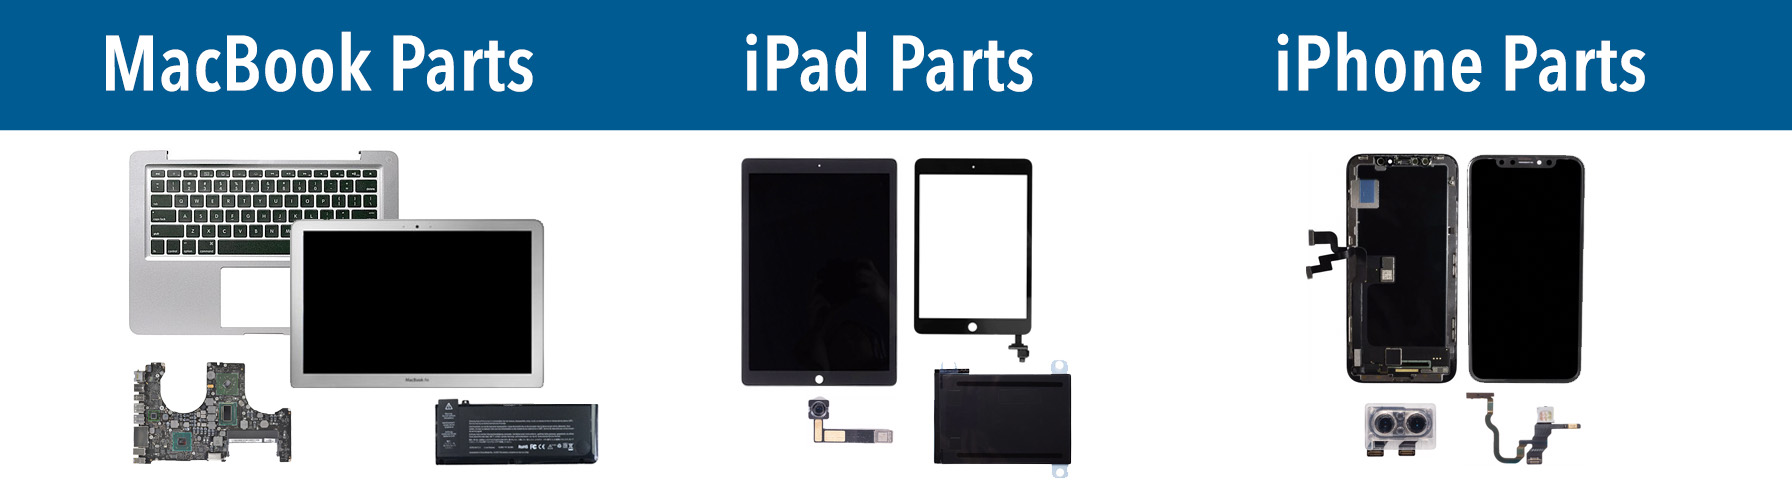 Macbook, iPad, iPhone Parts